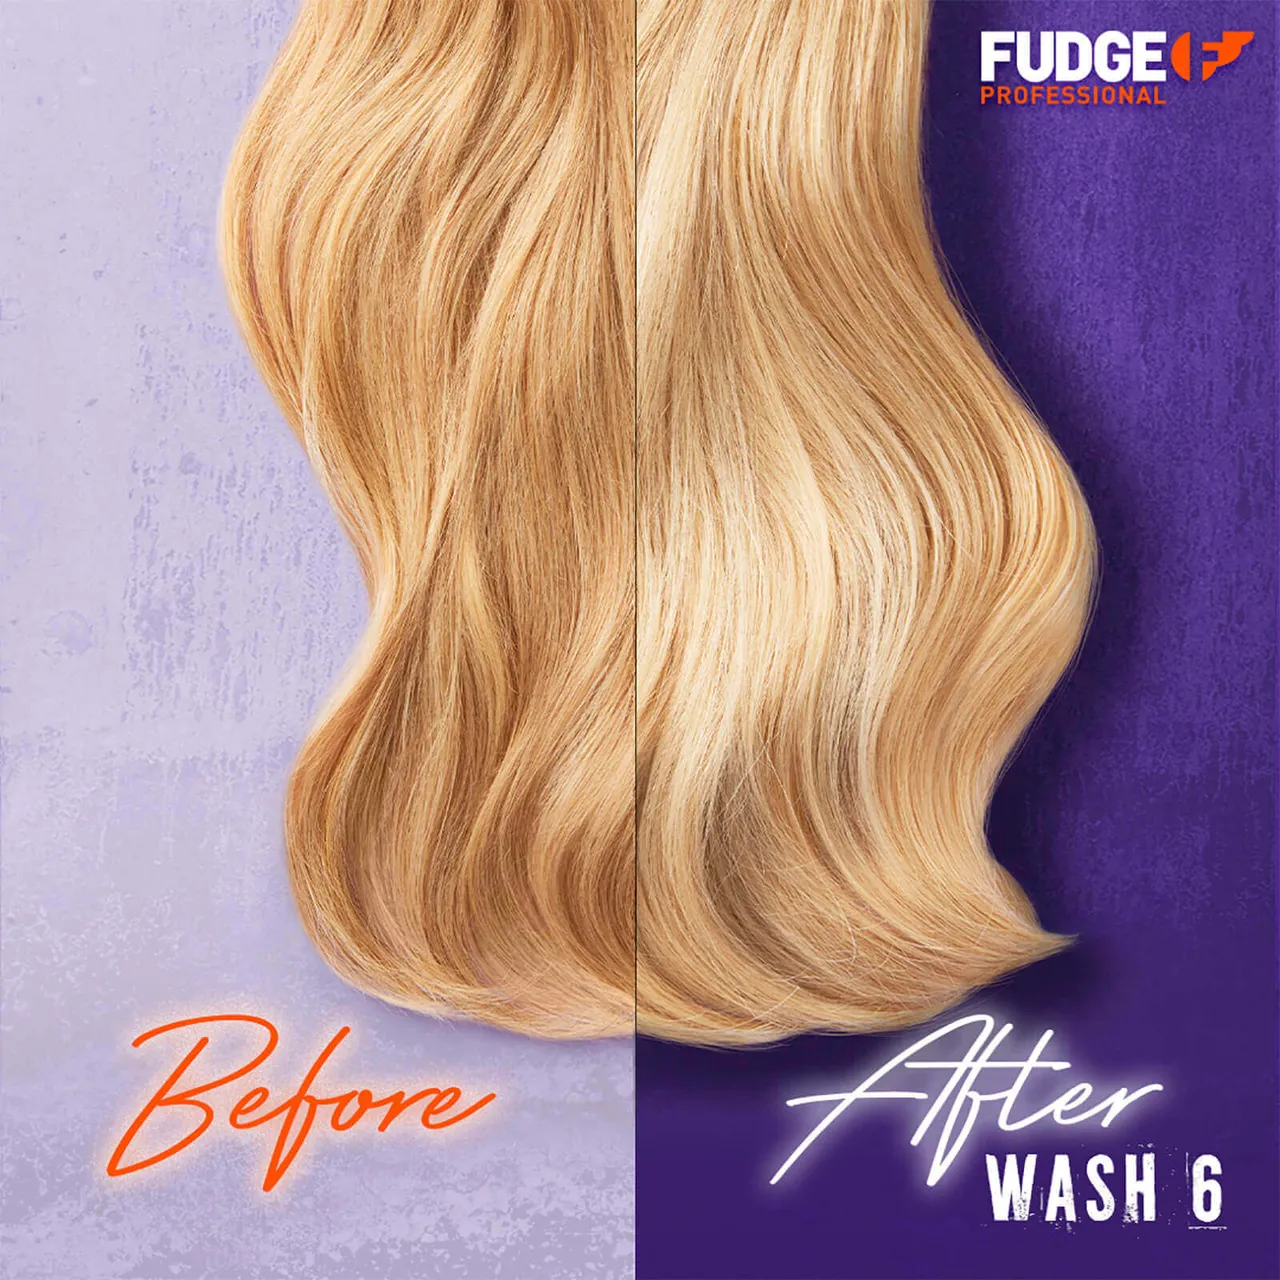 Fudge Professional Everyday Clean Blonde Damage Rewind Violet Toning Shampoo 250ml